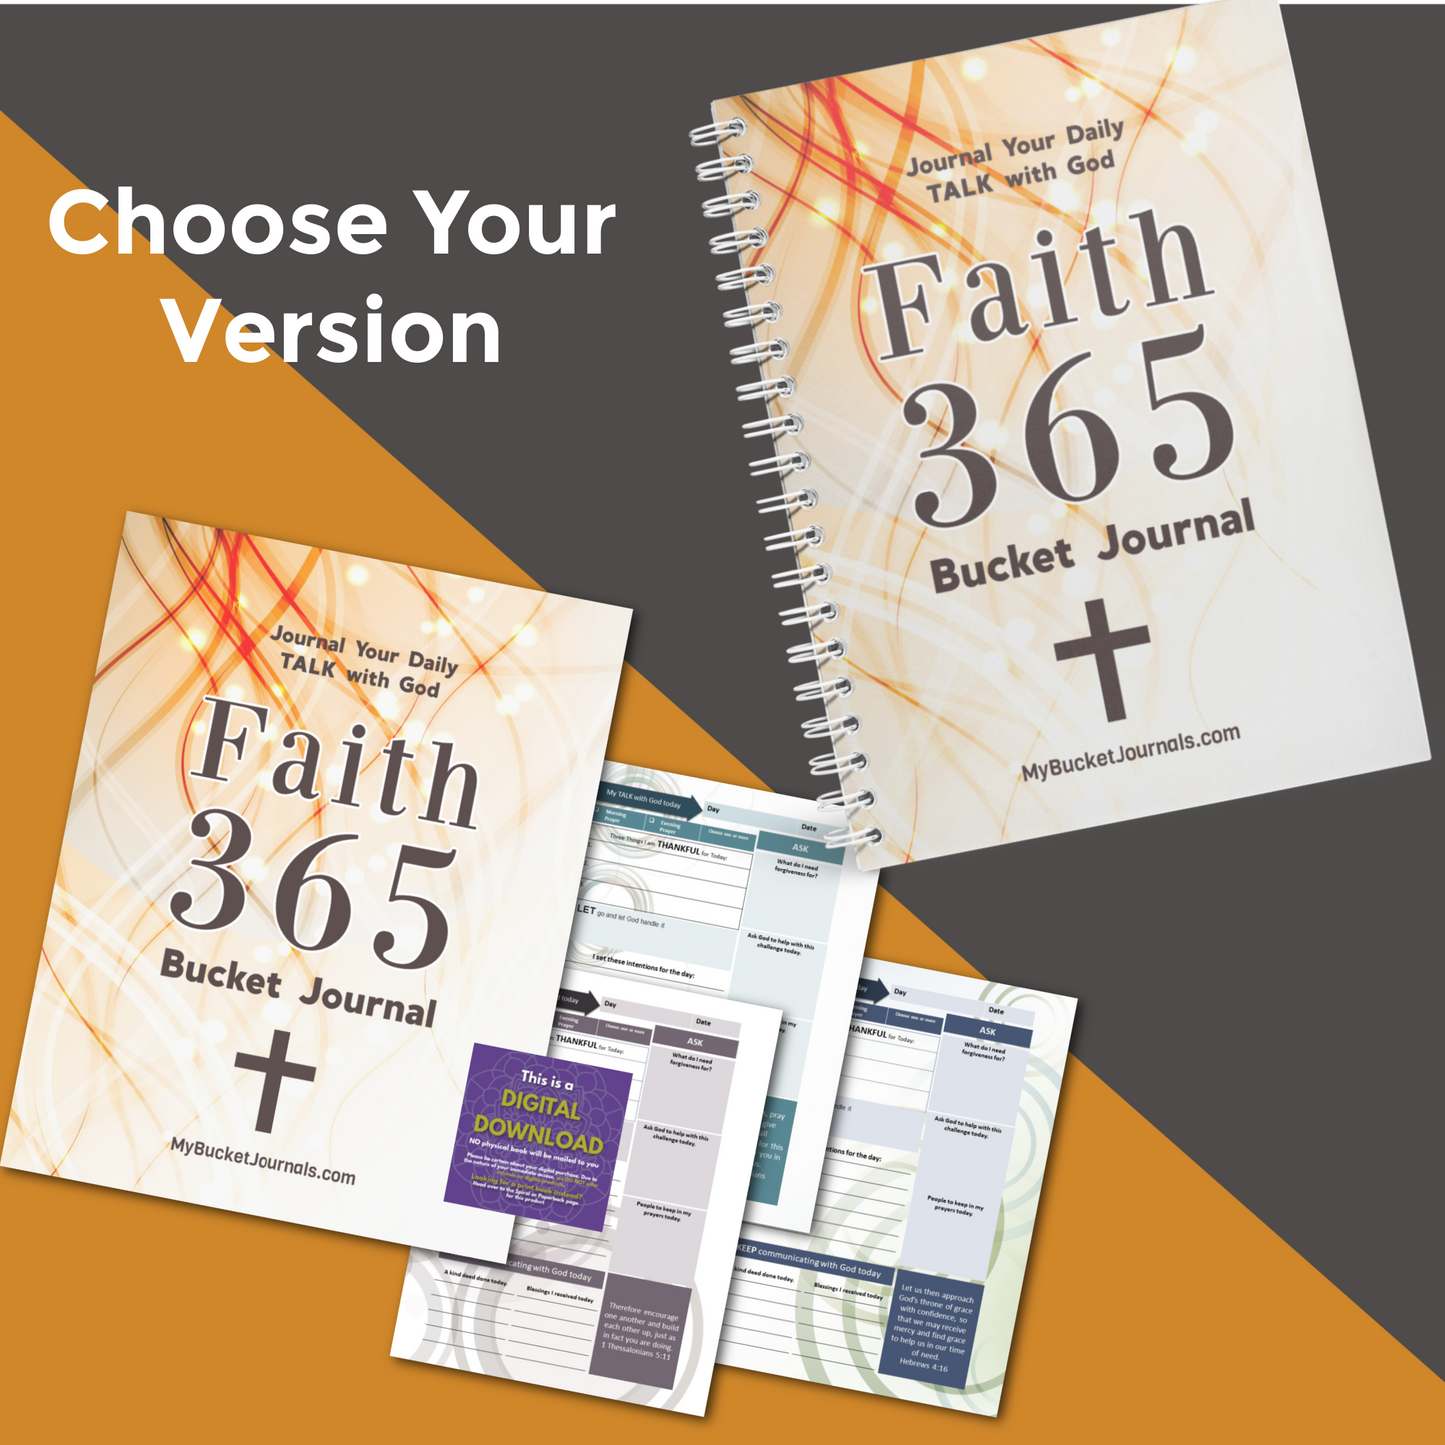 Faith 365 Bucket Journal - Choose Your Version